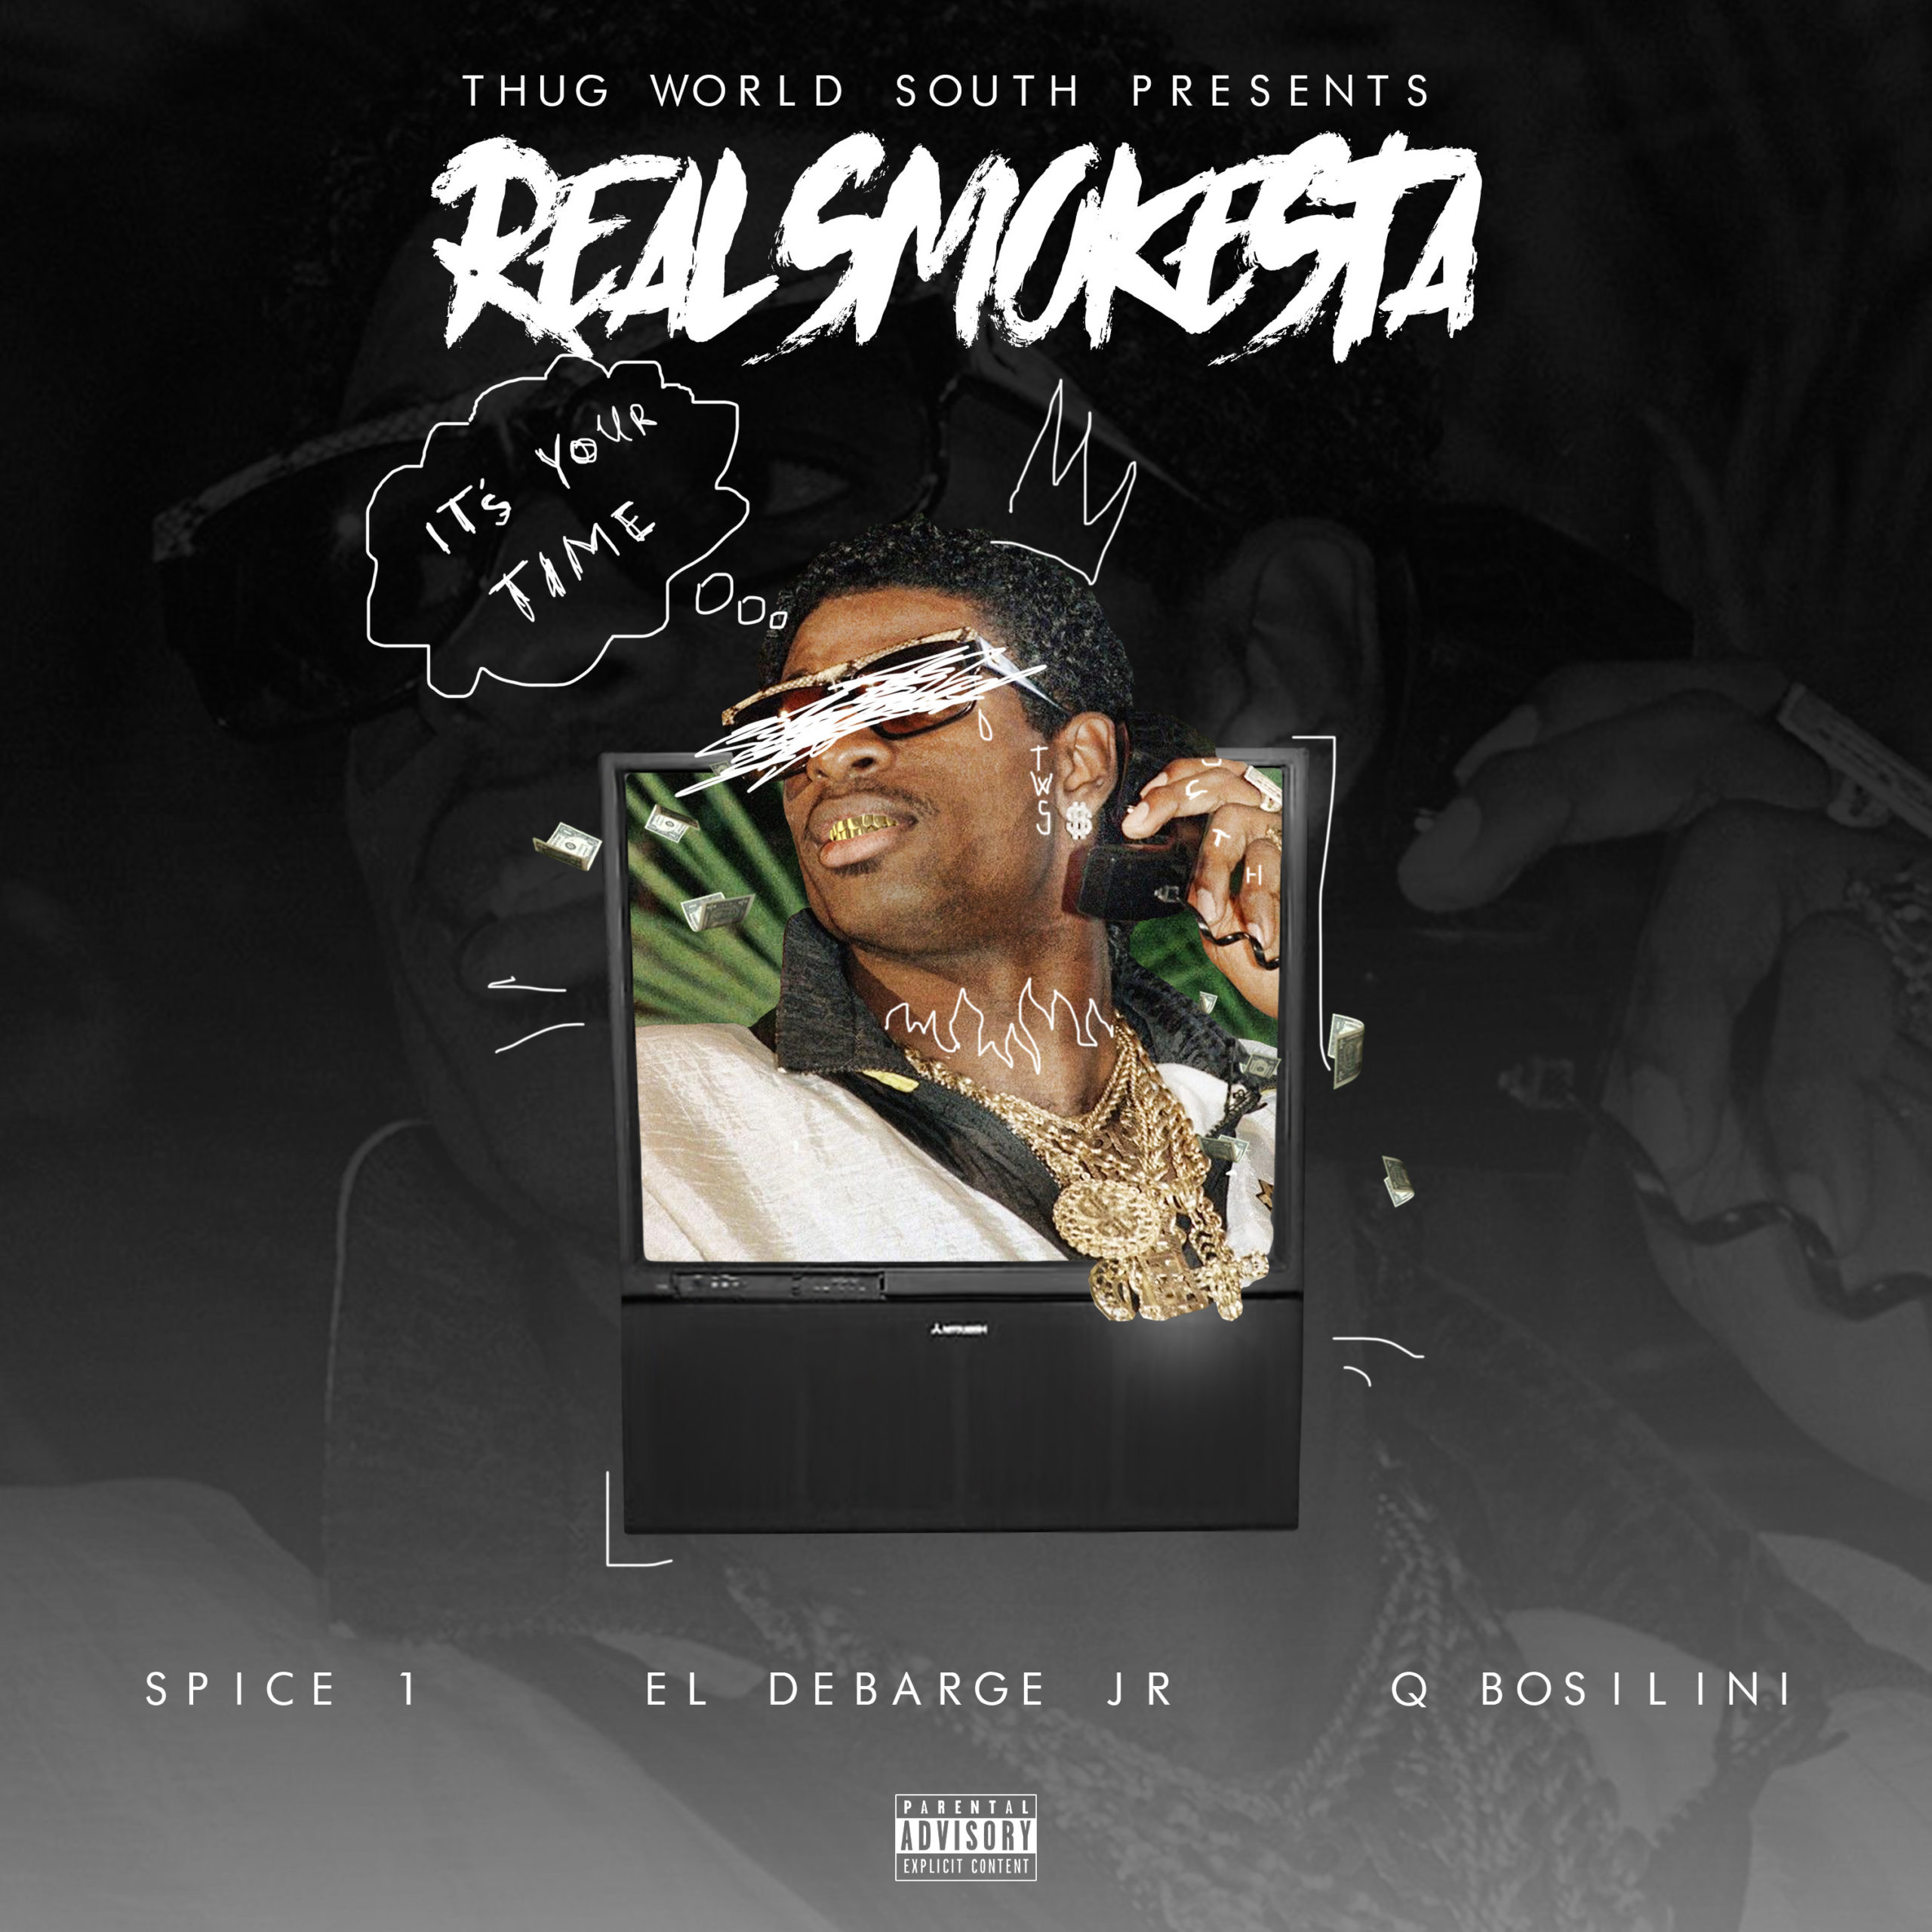 Spice 1’s artist Real Smokesta prepares to make his Thug World South debut